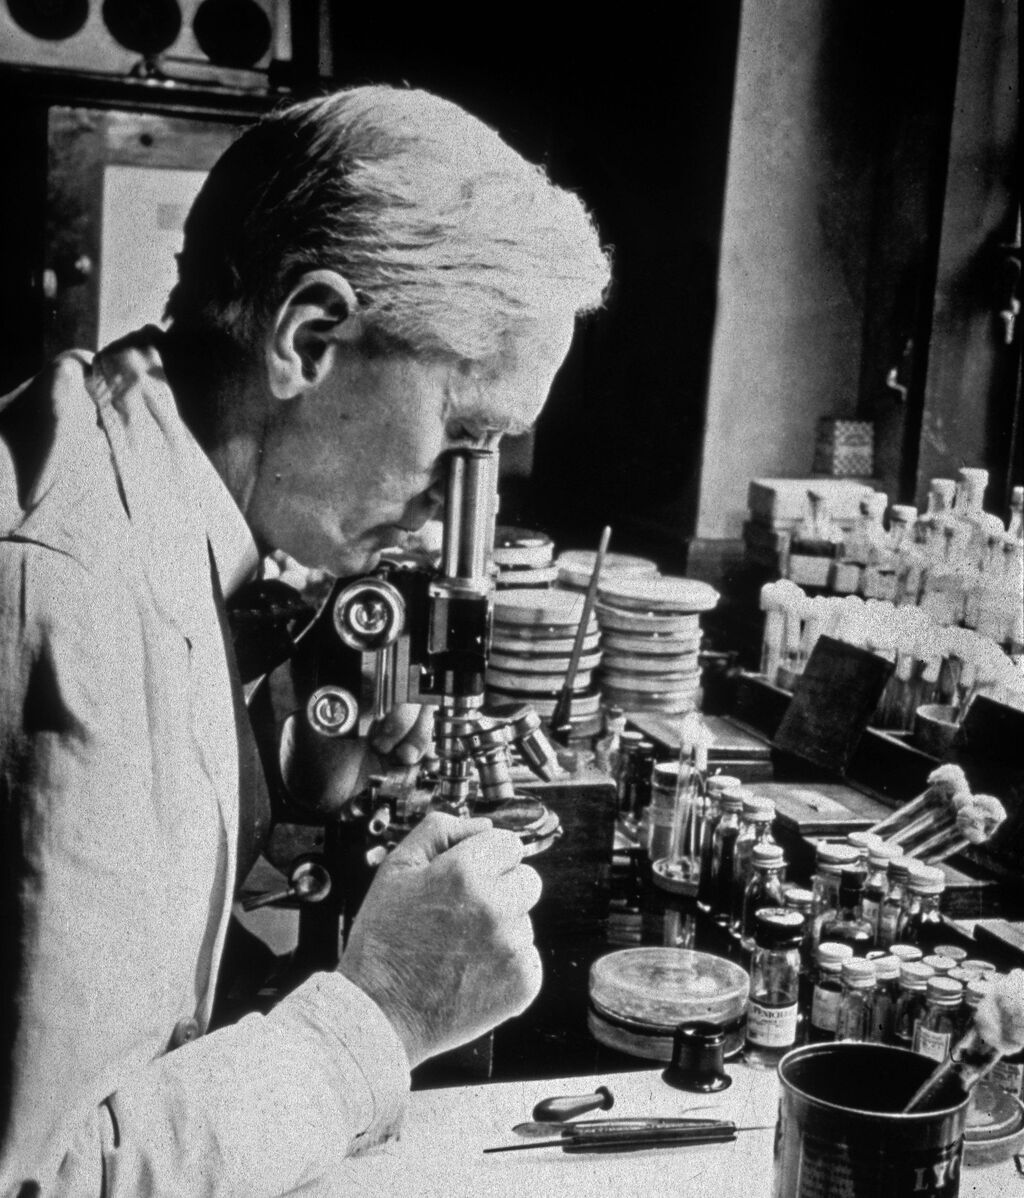 La penicilina 'enemiga' que salvó a Hitler - NIUS